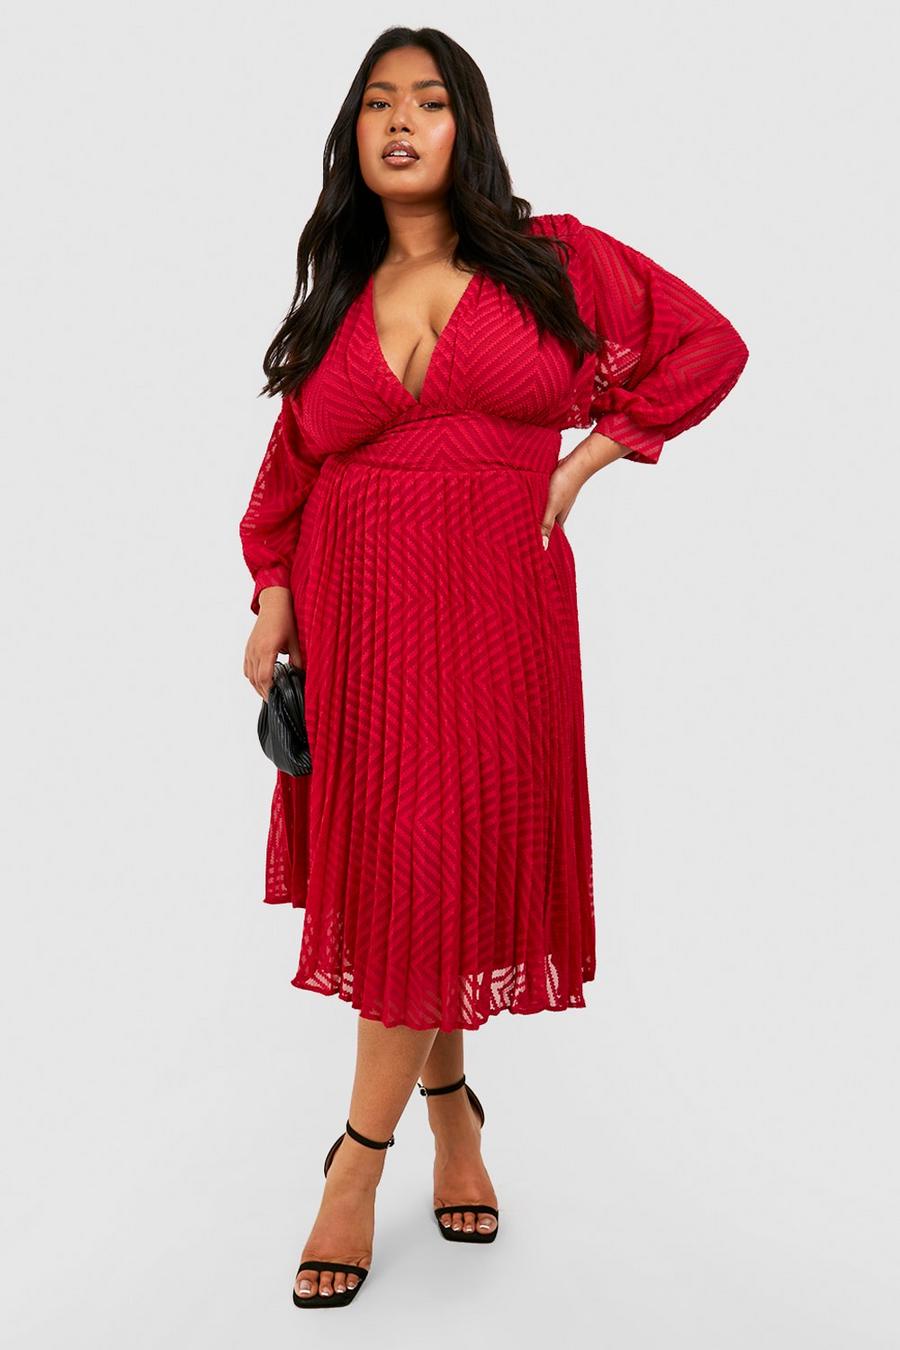 Berry שמלת סקייטר מידי שיפון עם טקסטורה למידות גדולות